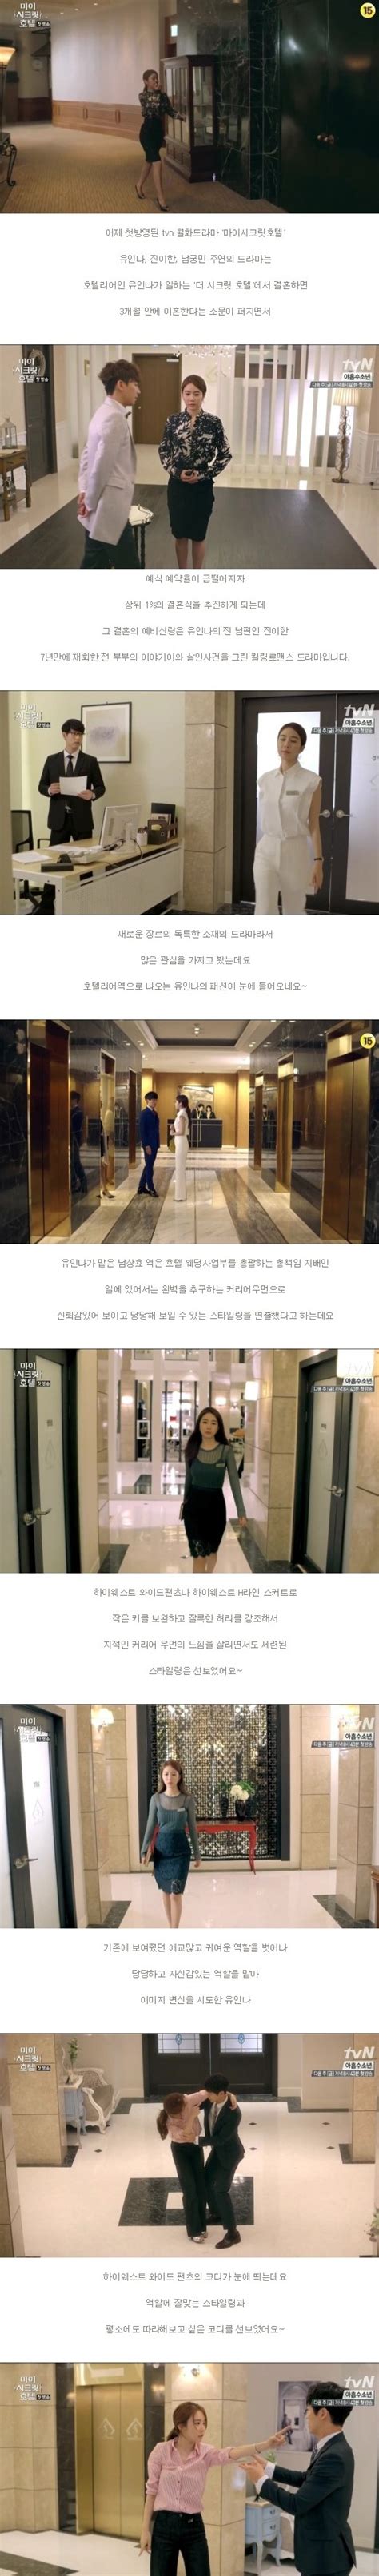 My Secret Hotel Episode 1 Screen Captures Drama 2014 마이 시크릿 호텔 My Secret Hotel Hotel